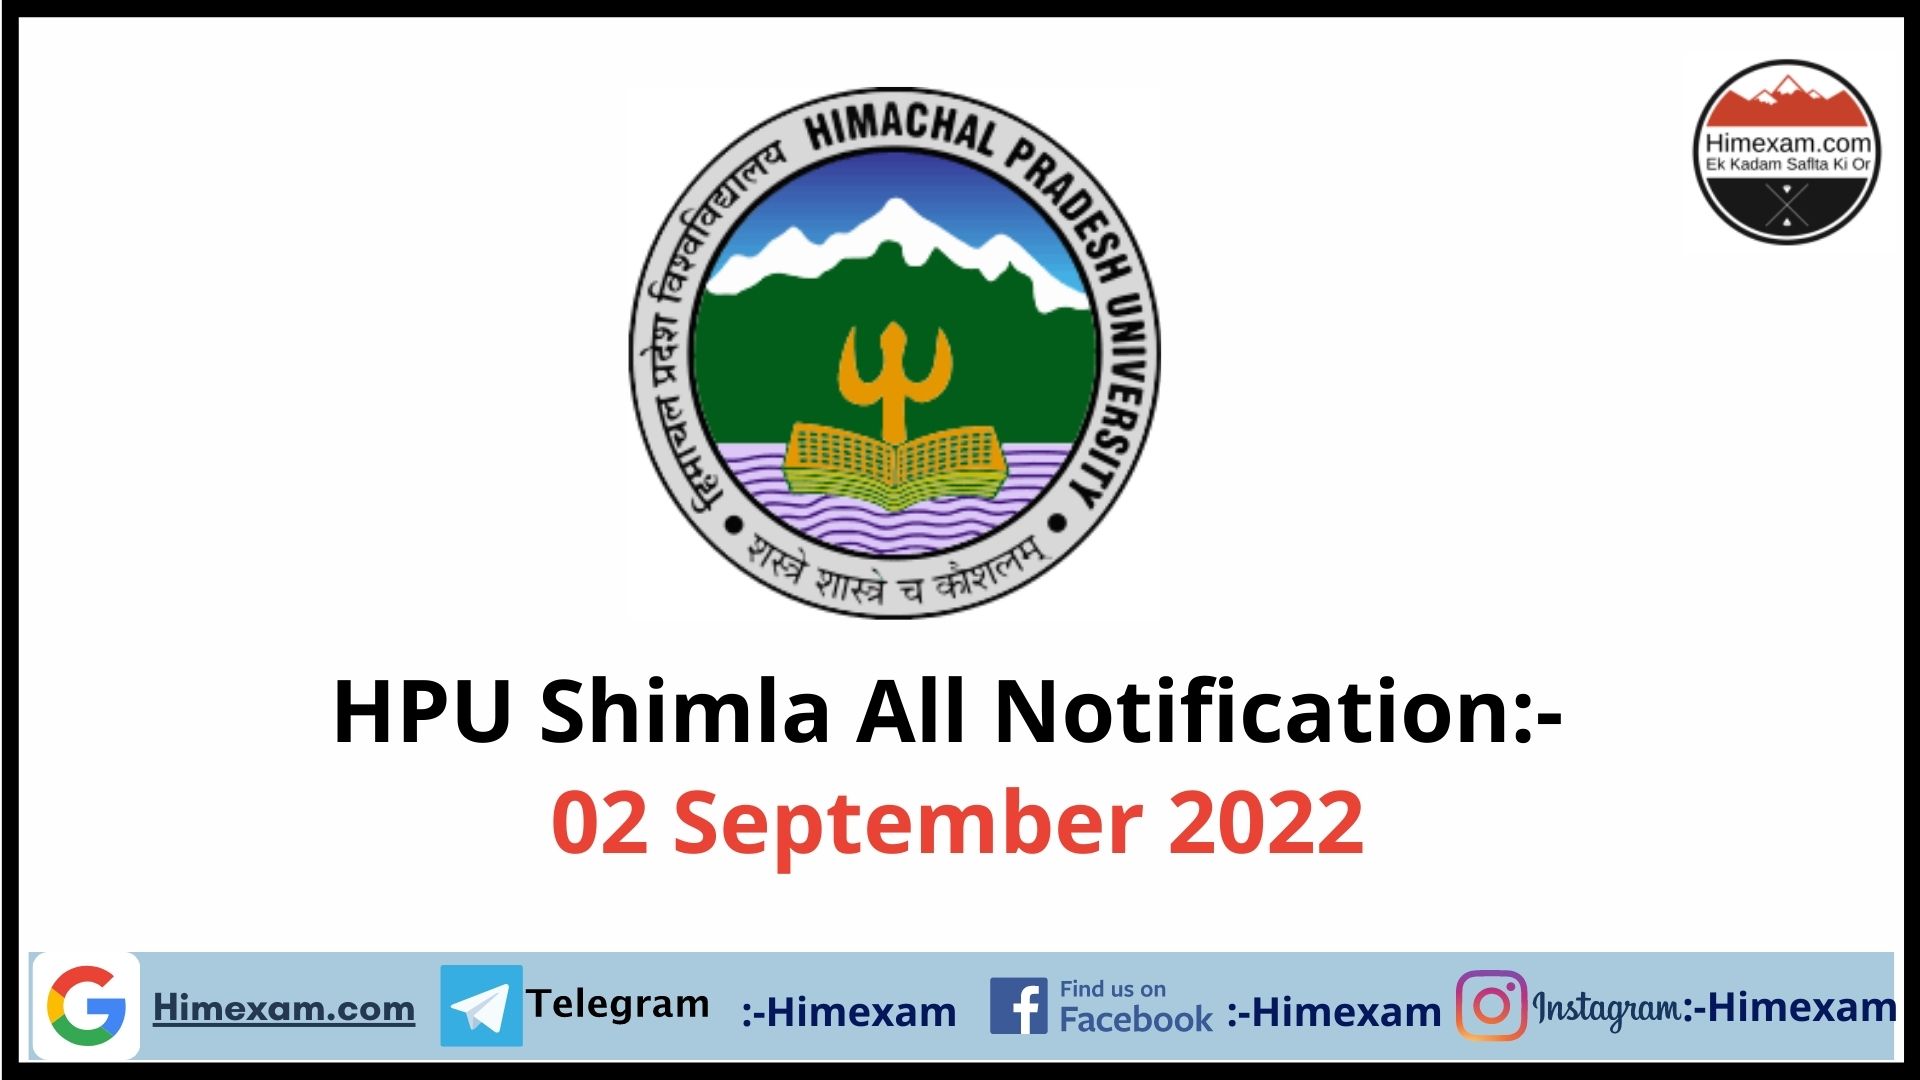 HPU Shimla All Notification:- 02 September 2022